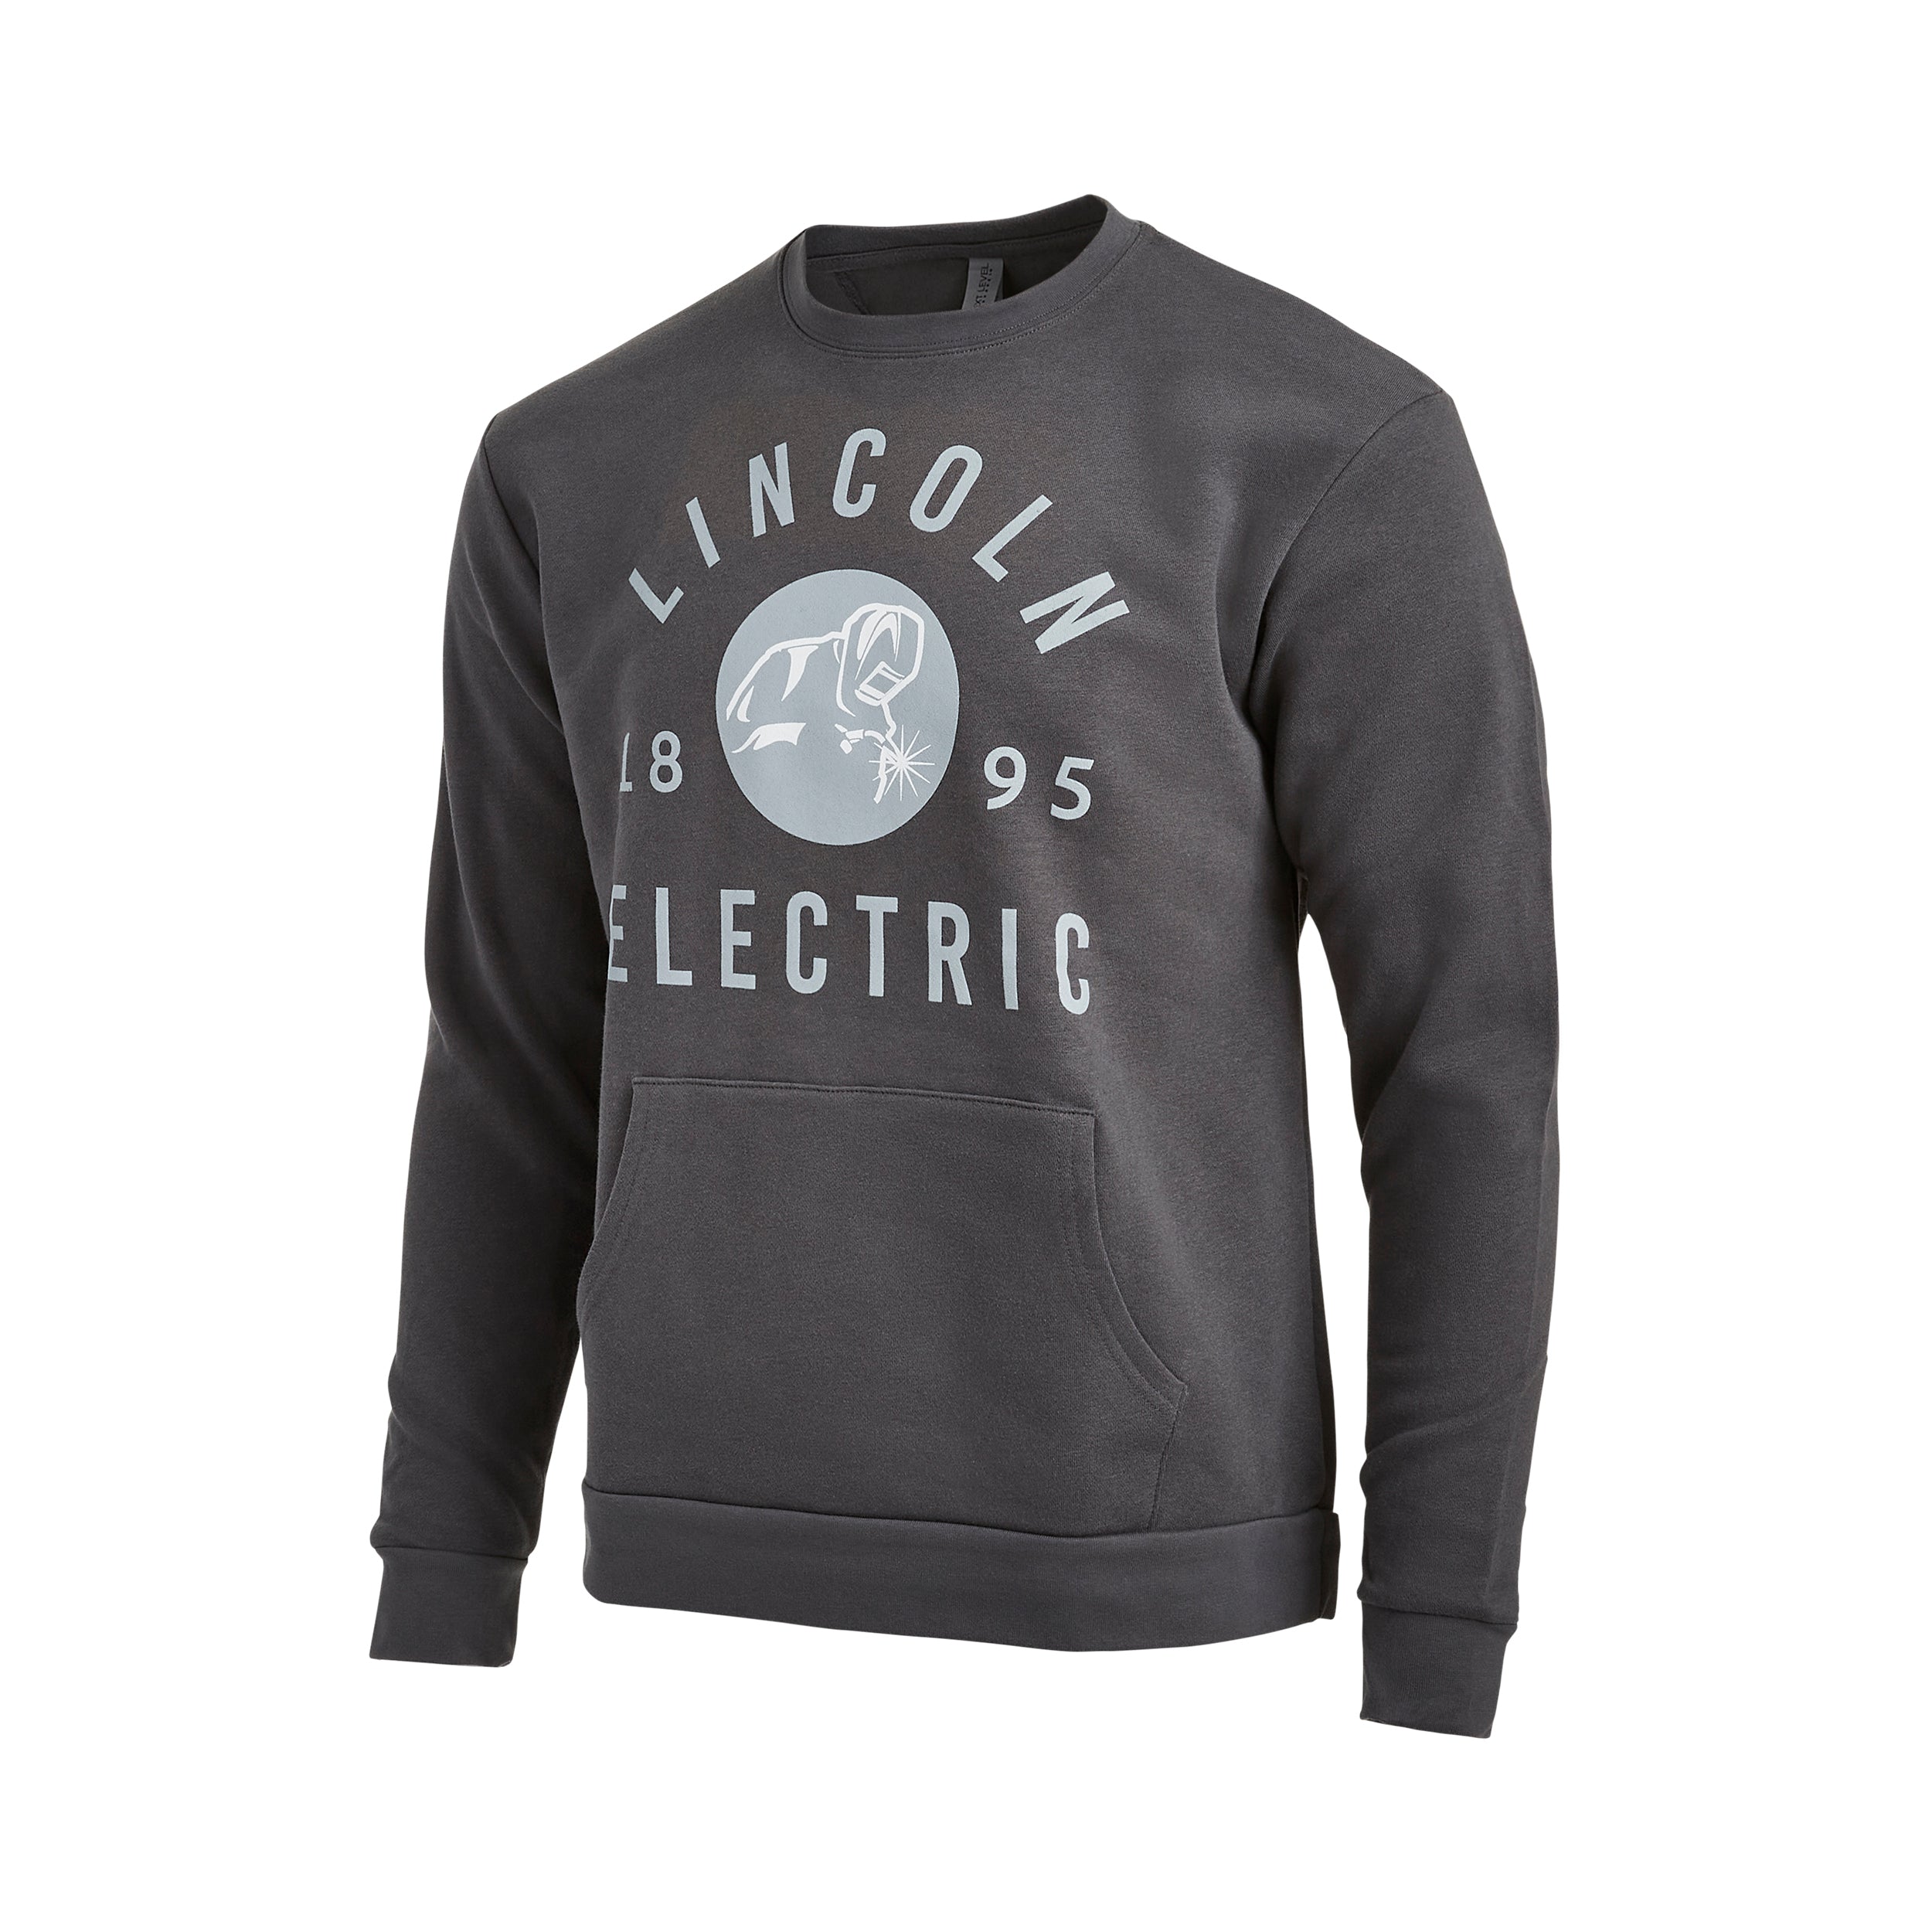 Next Level 1895 Pocket Unisex Sweatshirt – The Lincoln Electric 